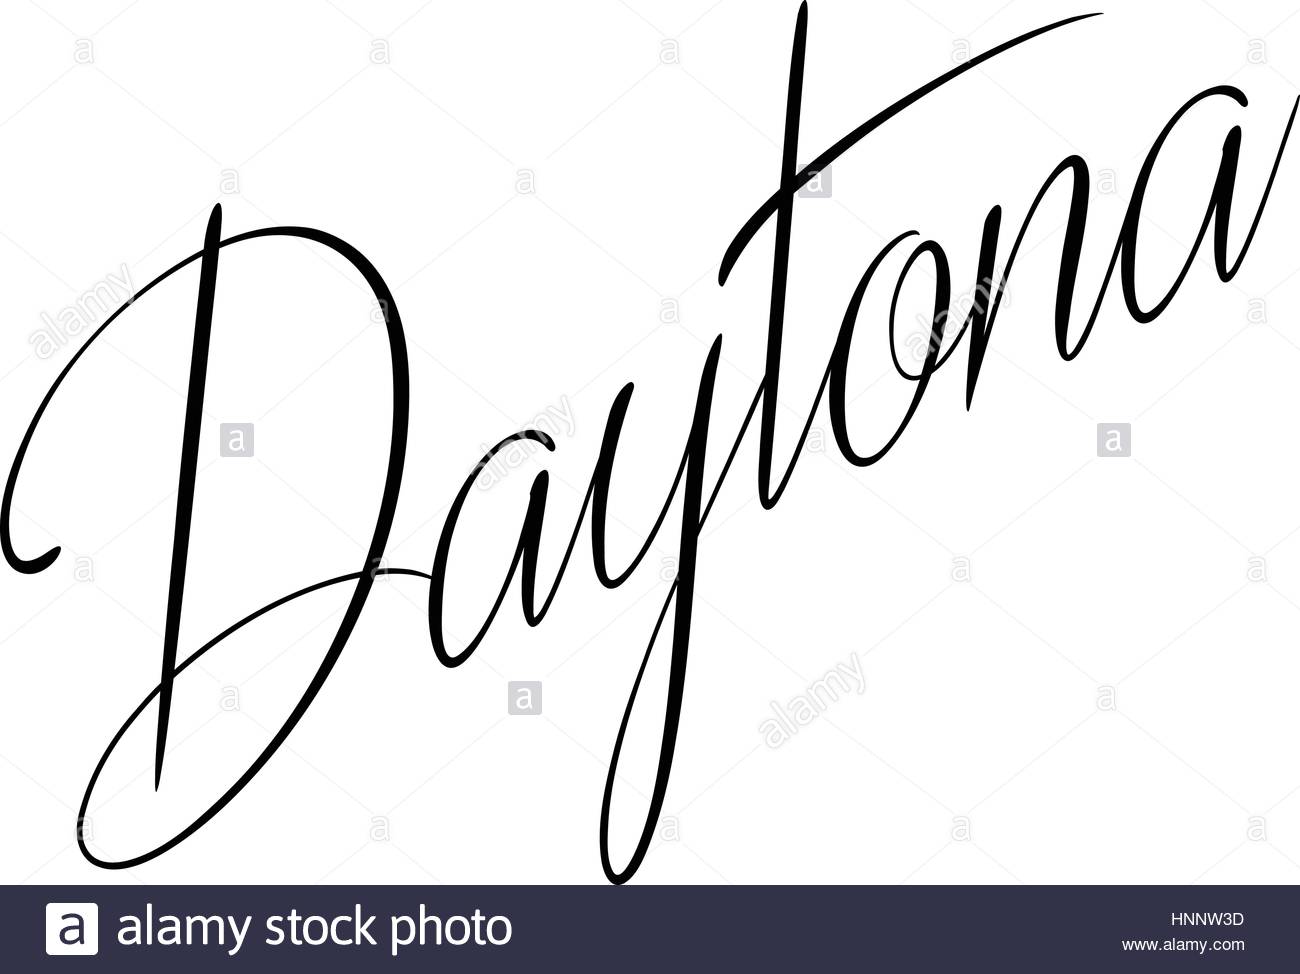 Daytona Text Sign Illustration On White Background Stock Vector